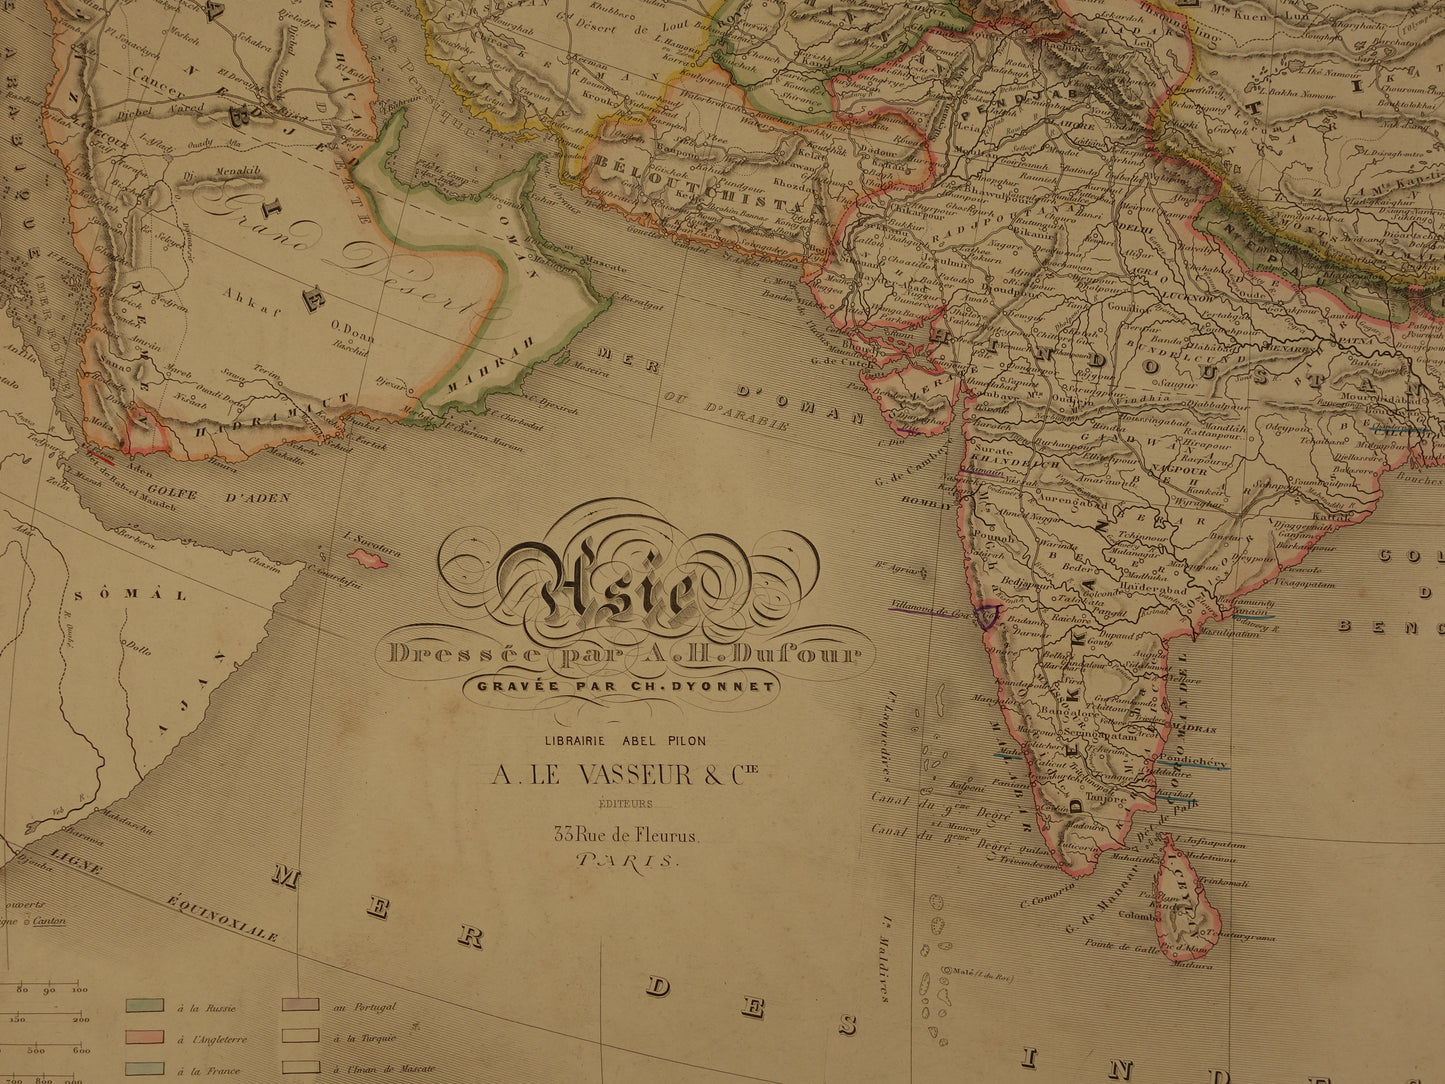 Antieke kaart van Azië uit 1886 Grote oude landkaart Azië continent Originele vintage kaarten